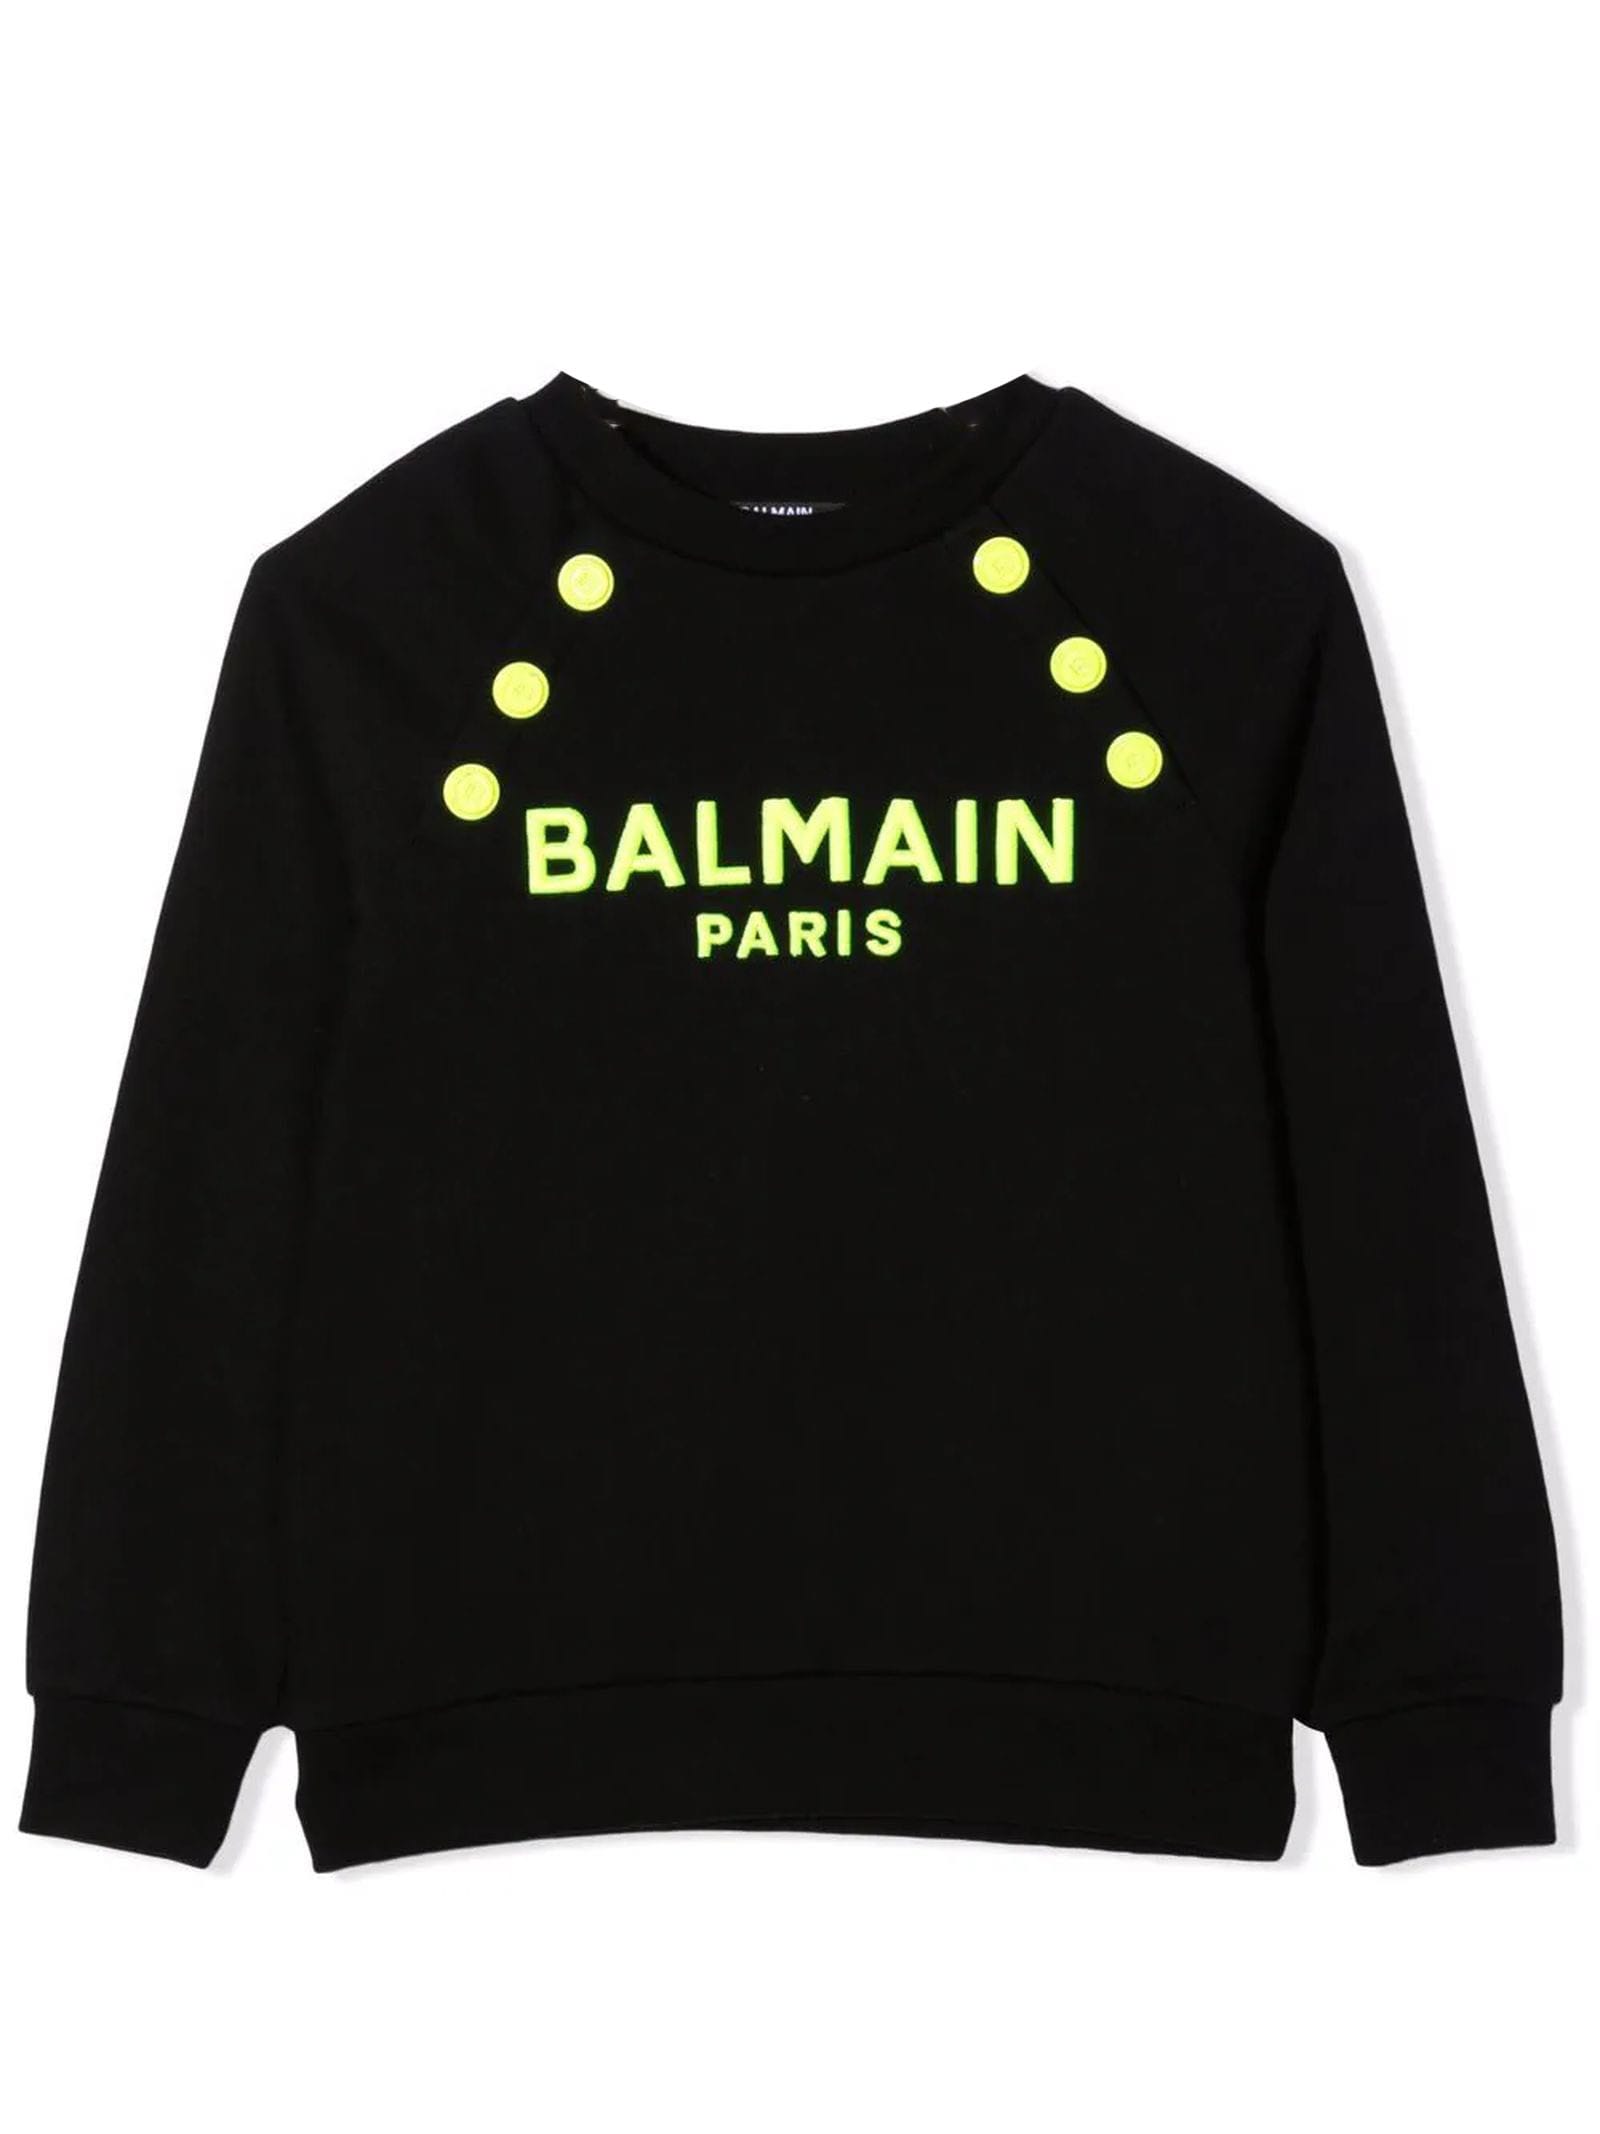 Balmain Black Cotton Sweateshirt